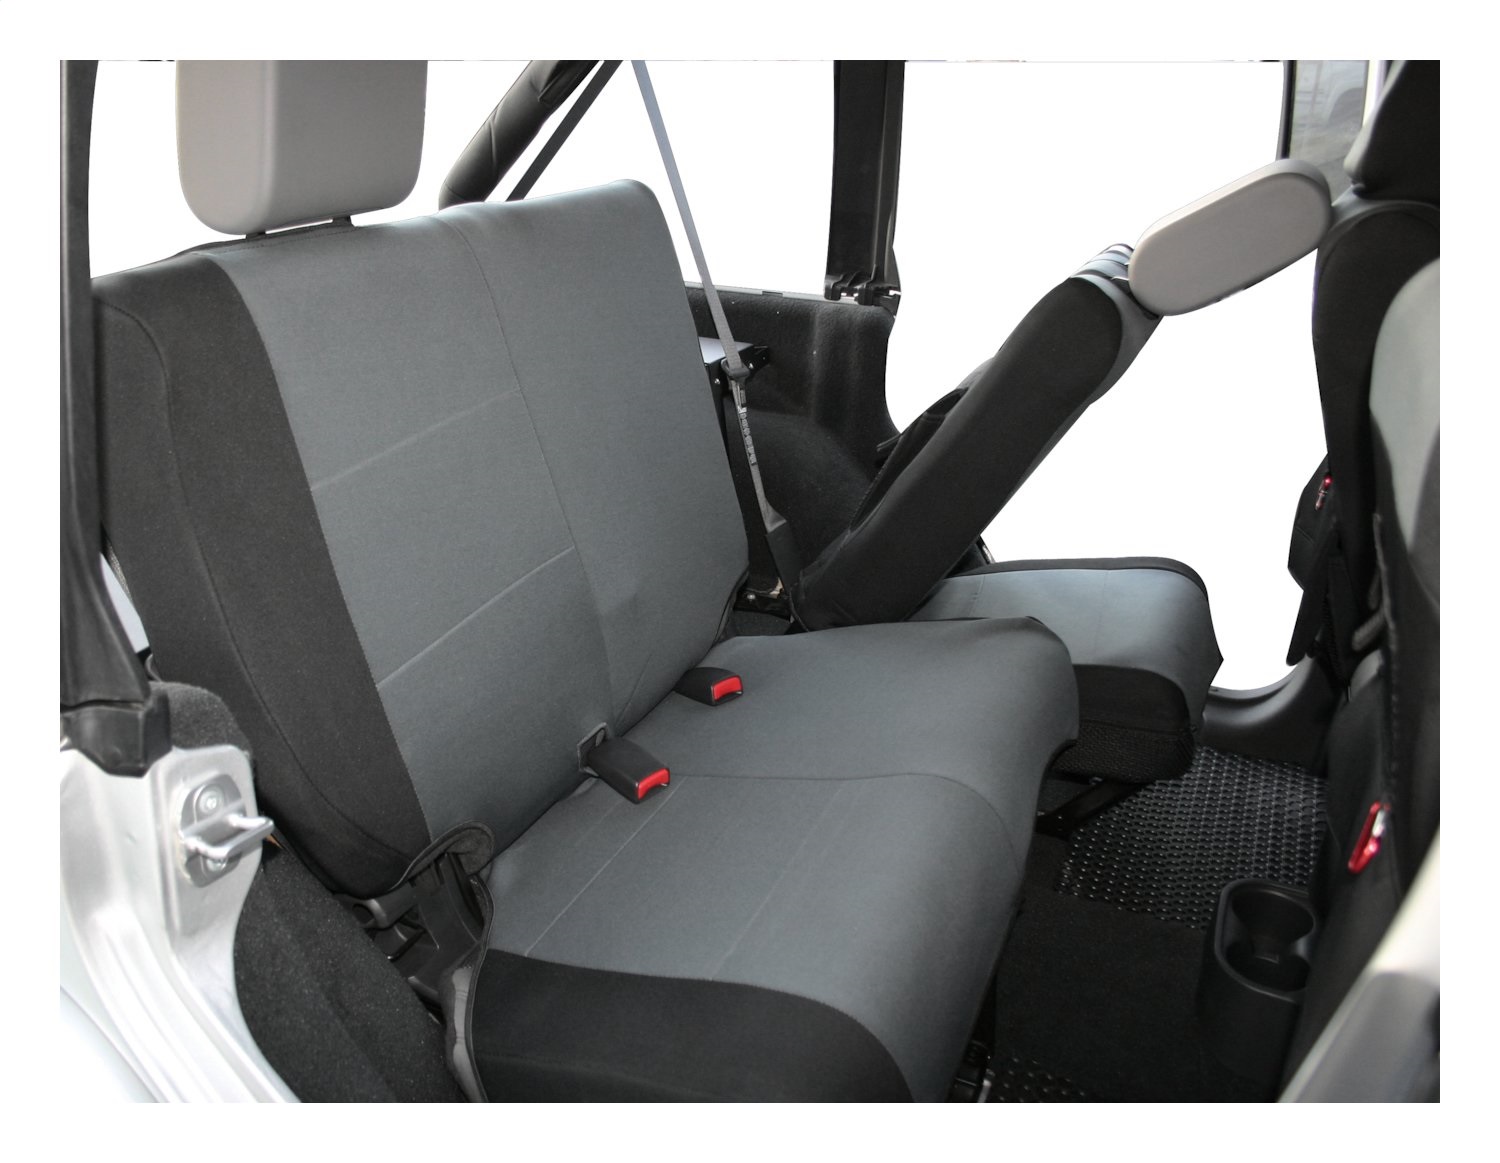 Rear Polycanvas Seat Cover for Jeep 07-11 JK Wrangler w/ 4-Doors; Black/Gray